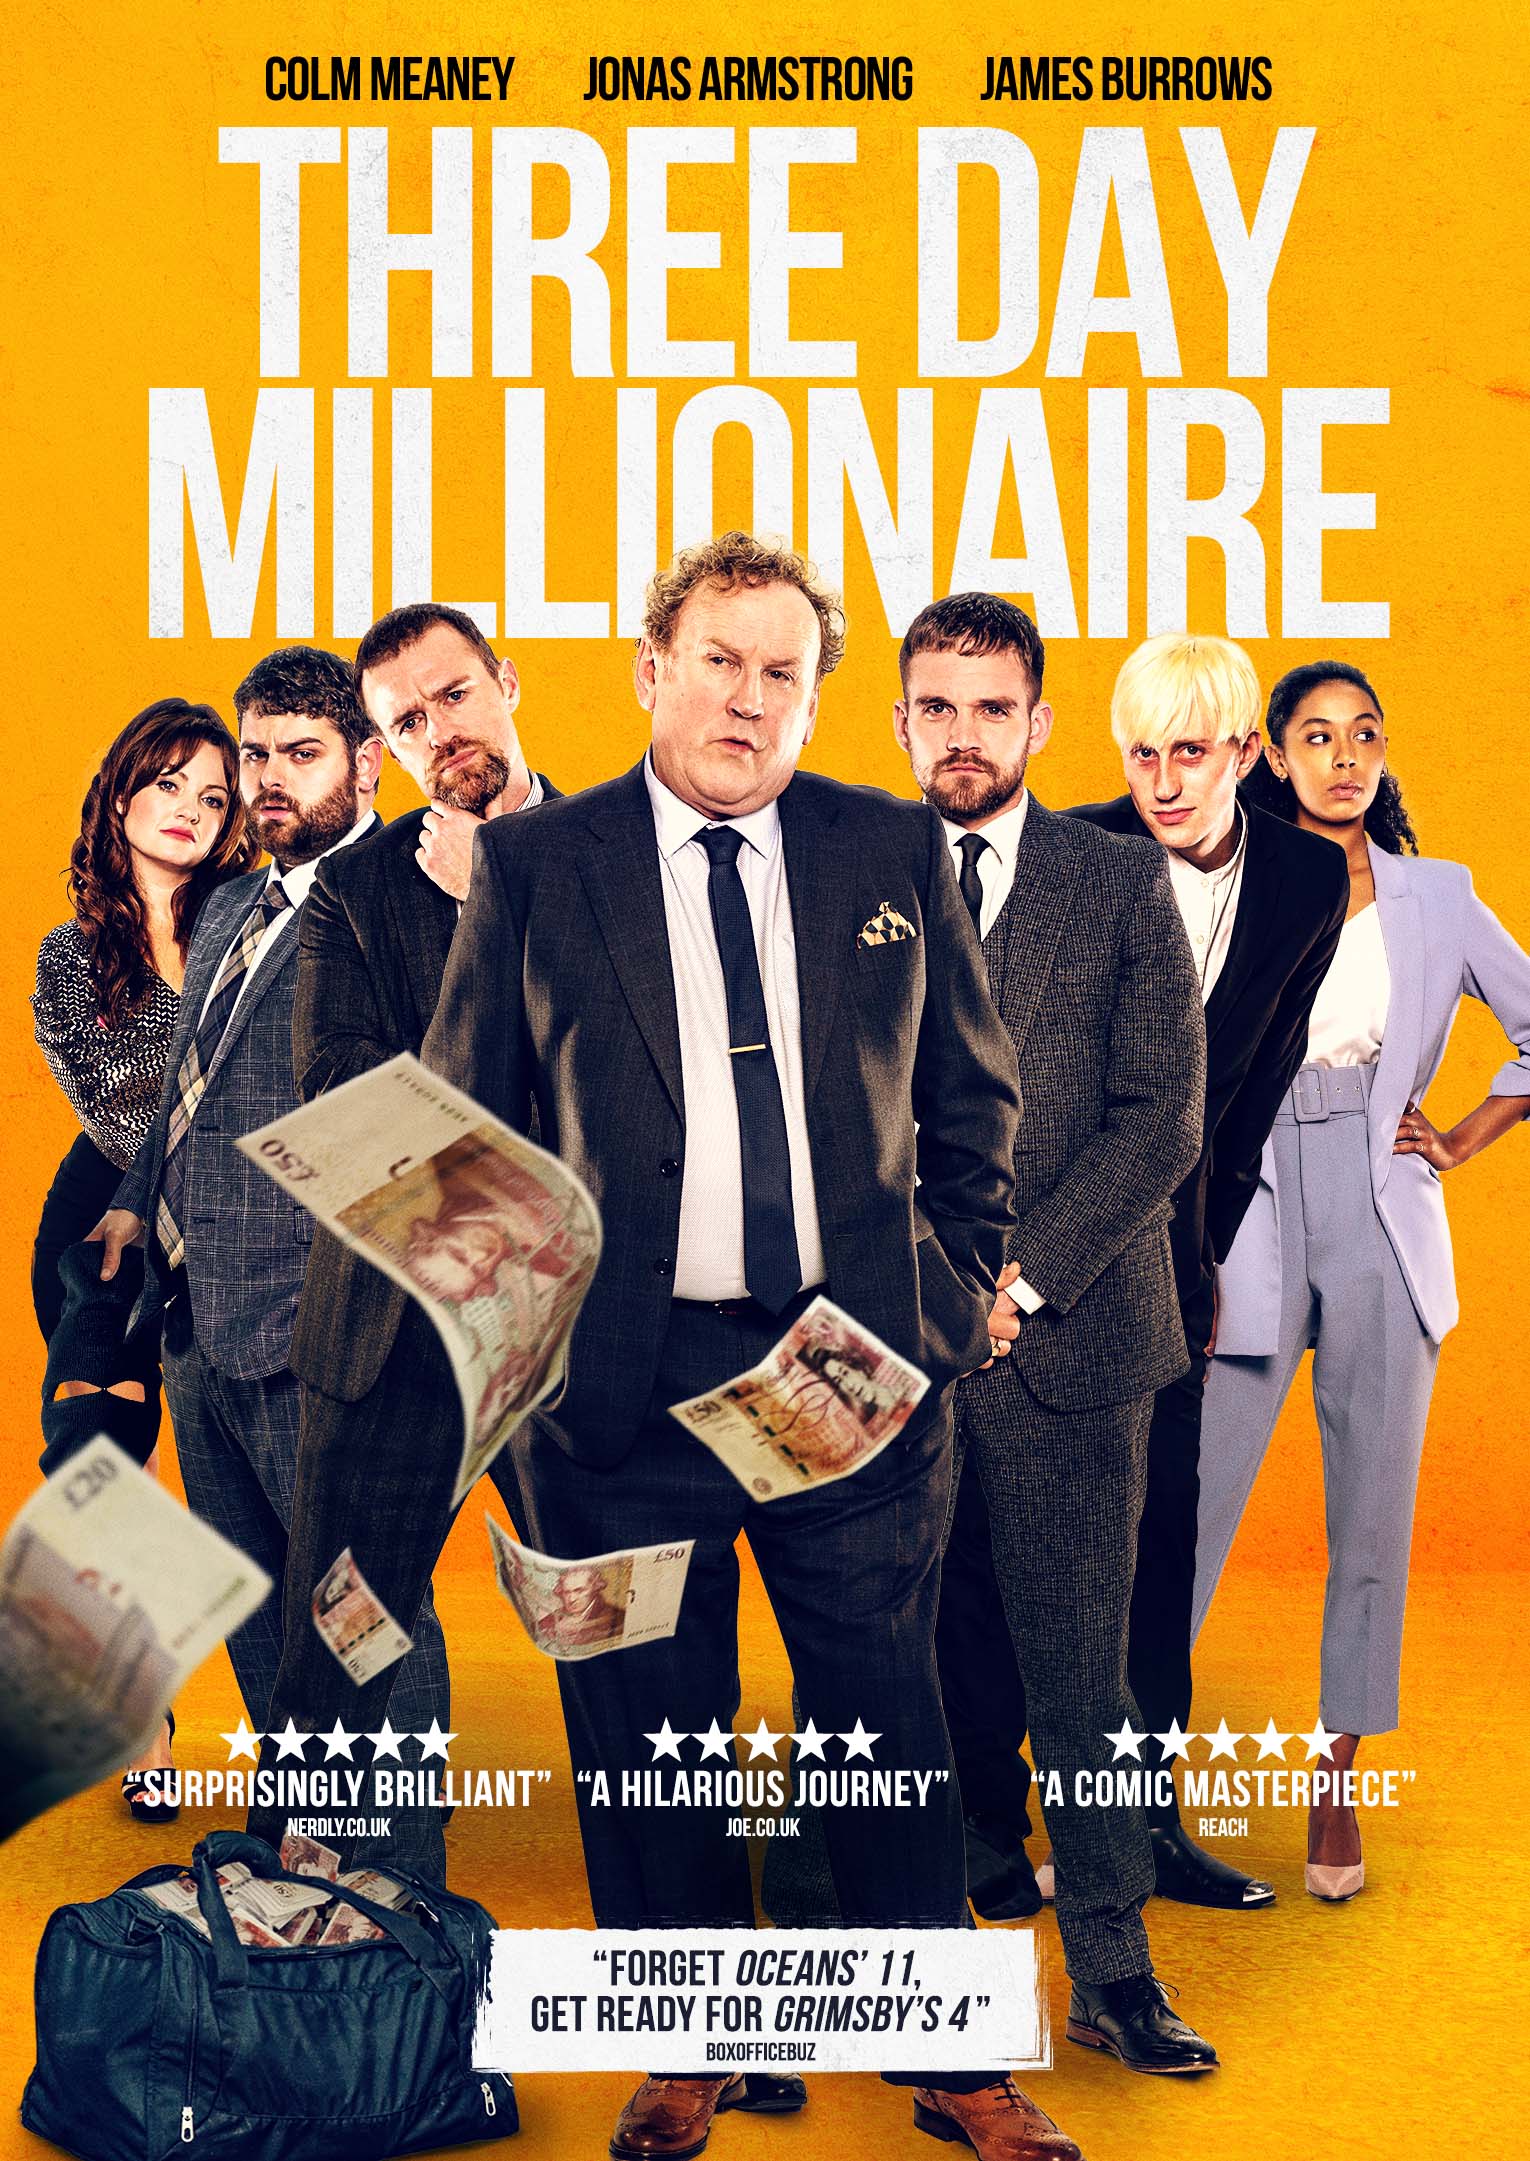 Three Day Millionaire Insider Advance screening Poster